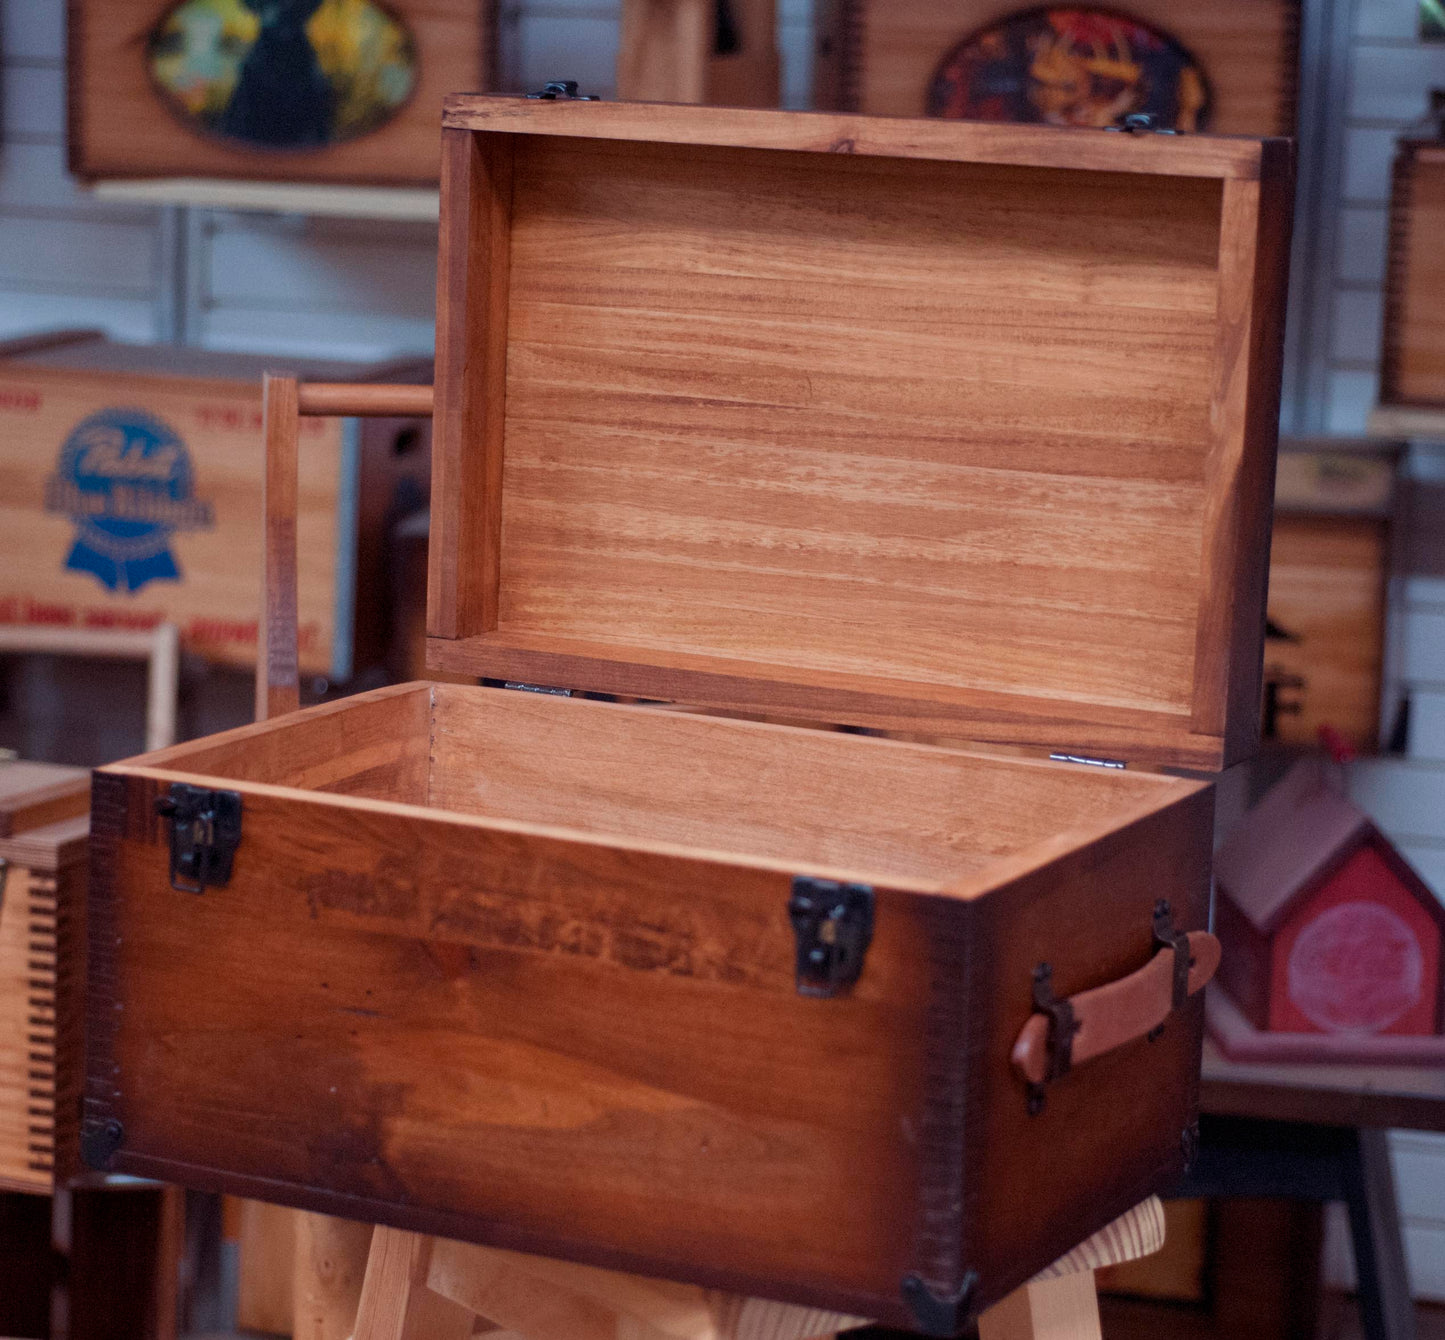 Wooden Memory Box Keepsake Box with Open Lid